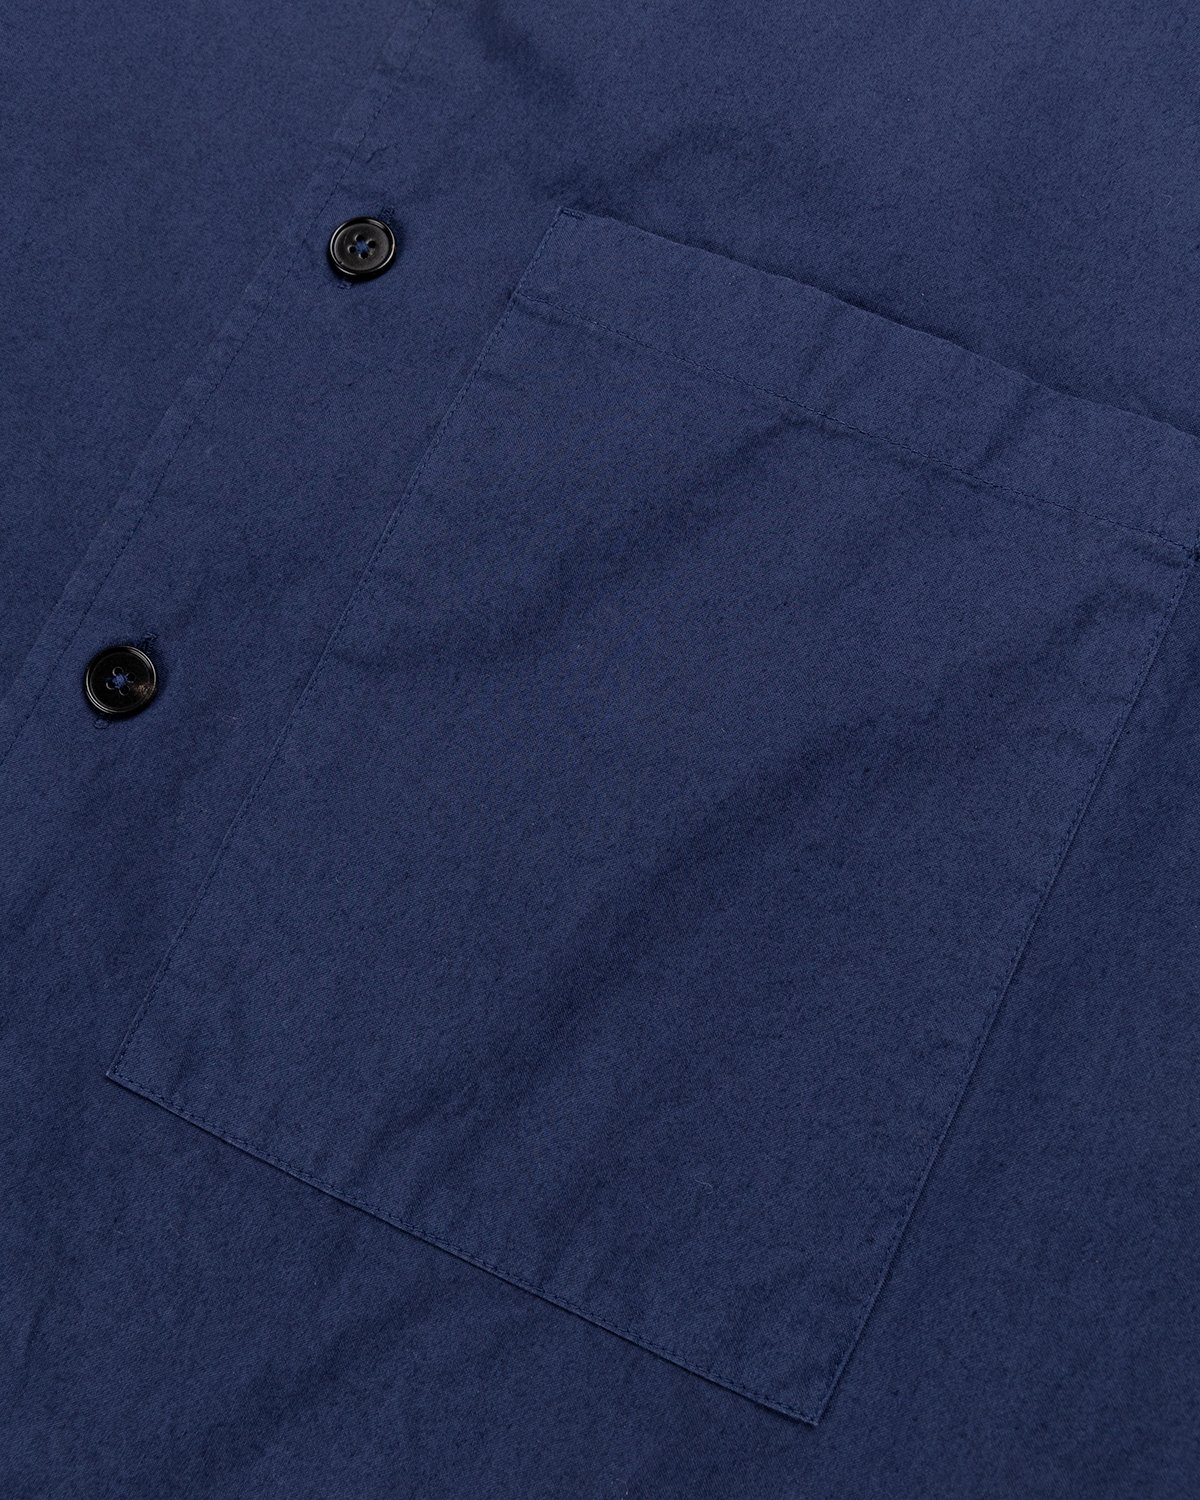 Jil Sander - Long Sleeve Work Shirt Navy - Clothing - Blue - Image 5